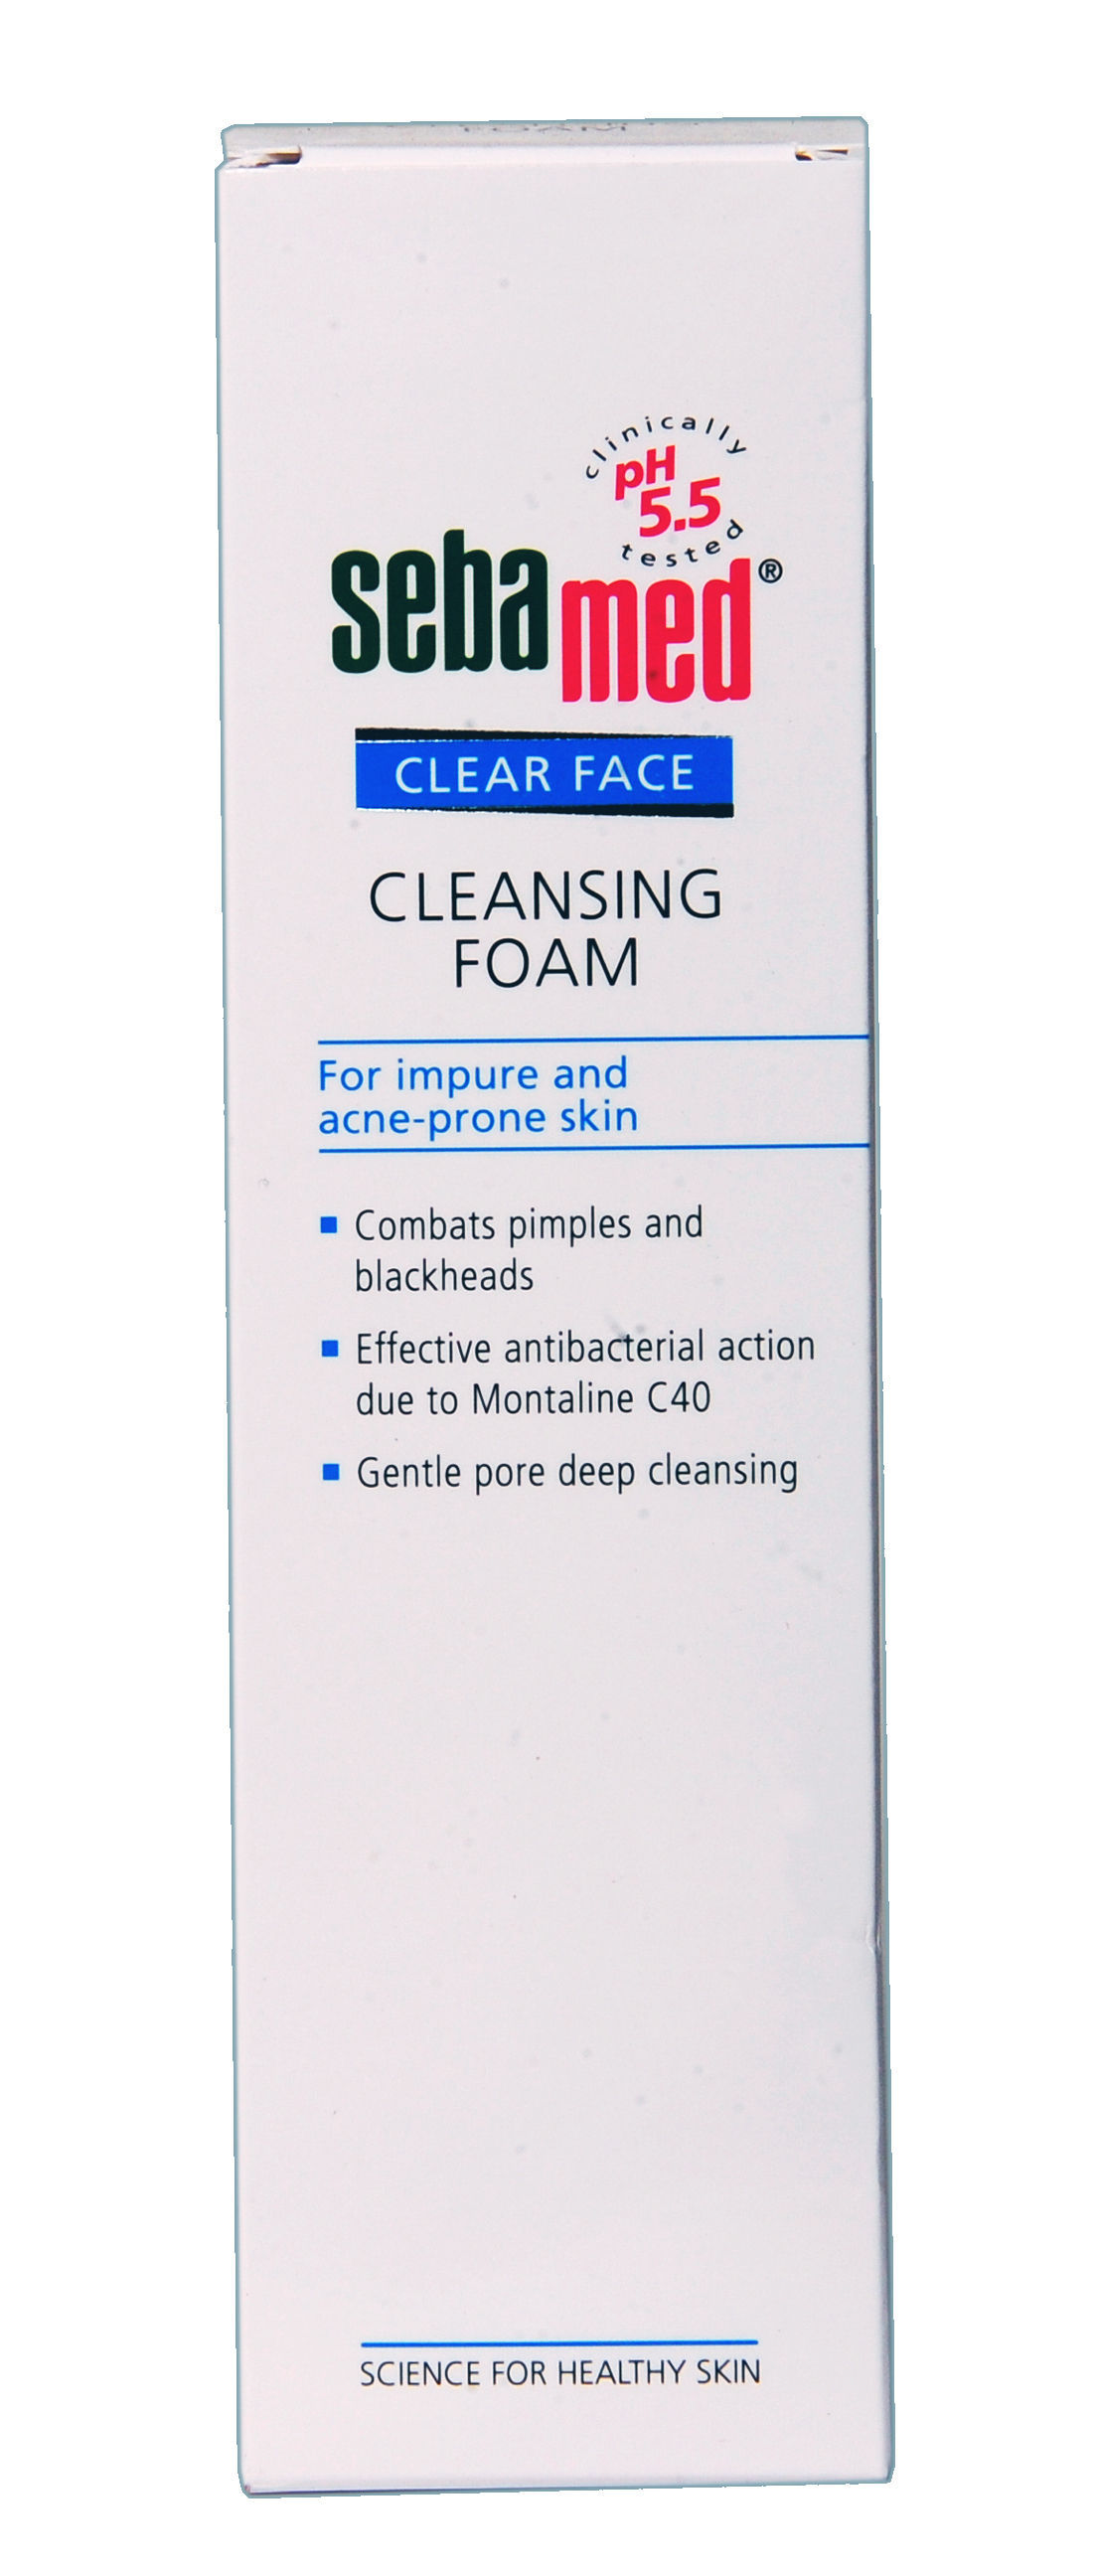 Sebamed Clear Face Cleansing Foam Ph5.5